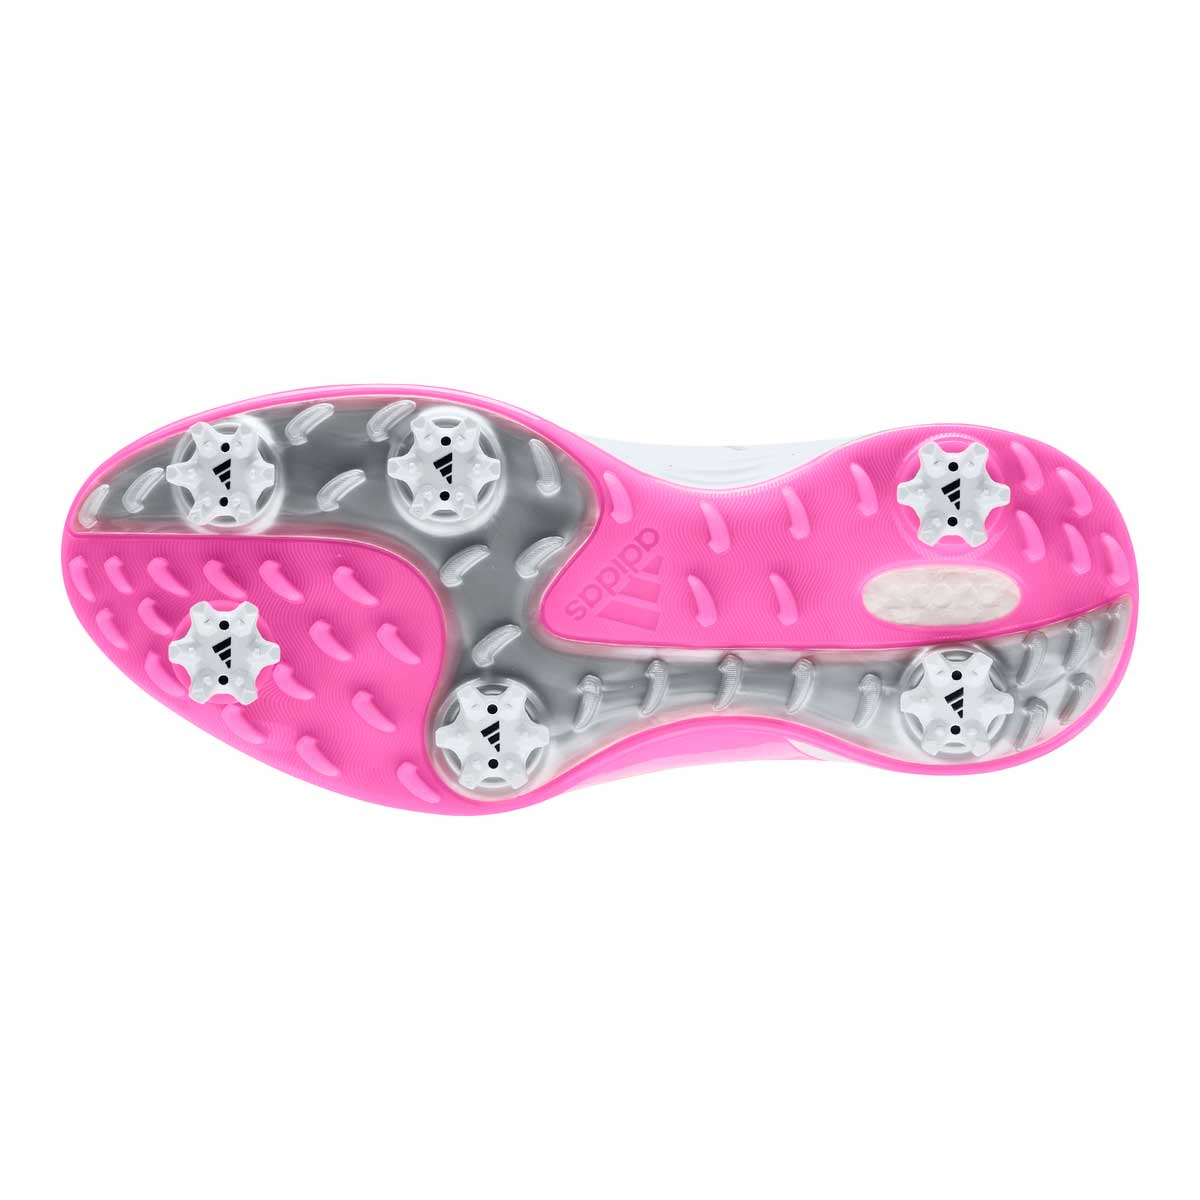 Adidas Women's ZG21 BOA White/Screaming Pink Golf Shoe